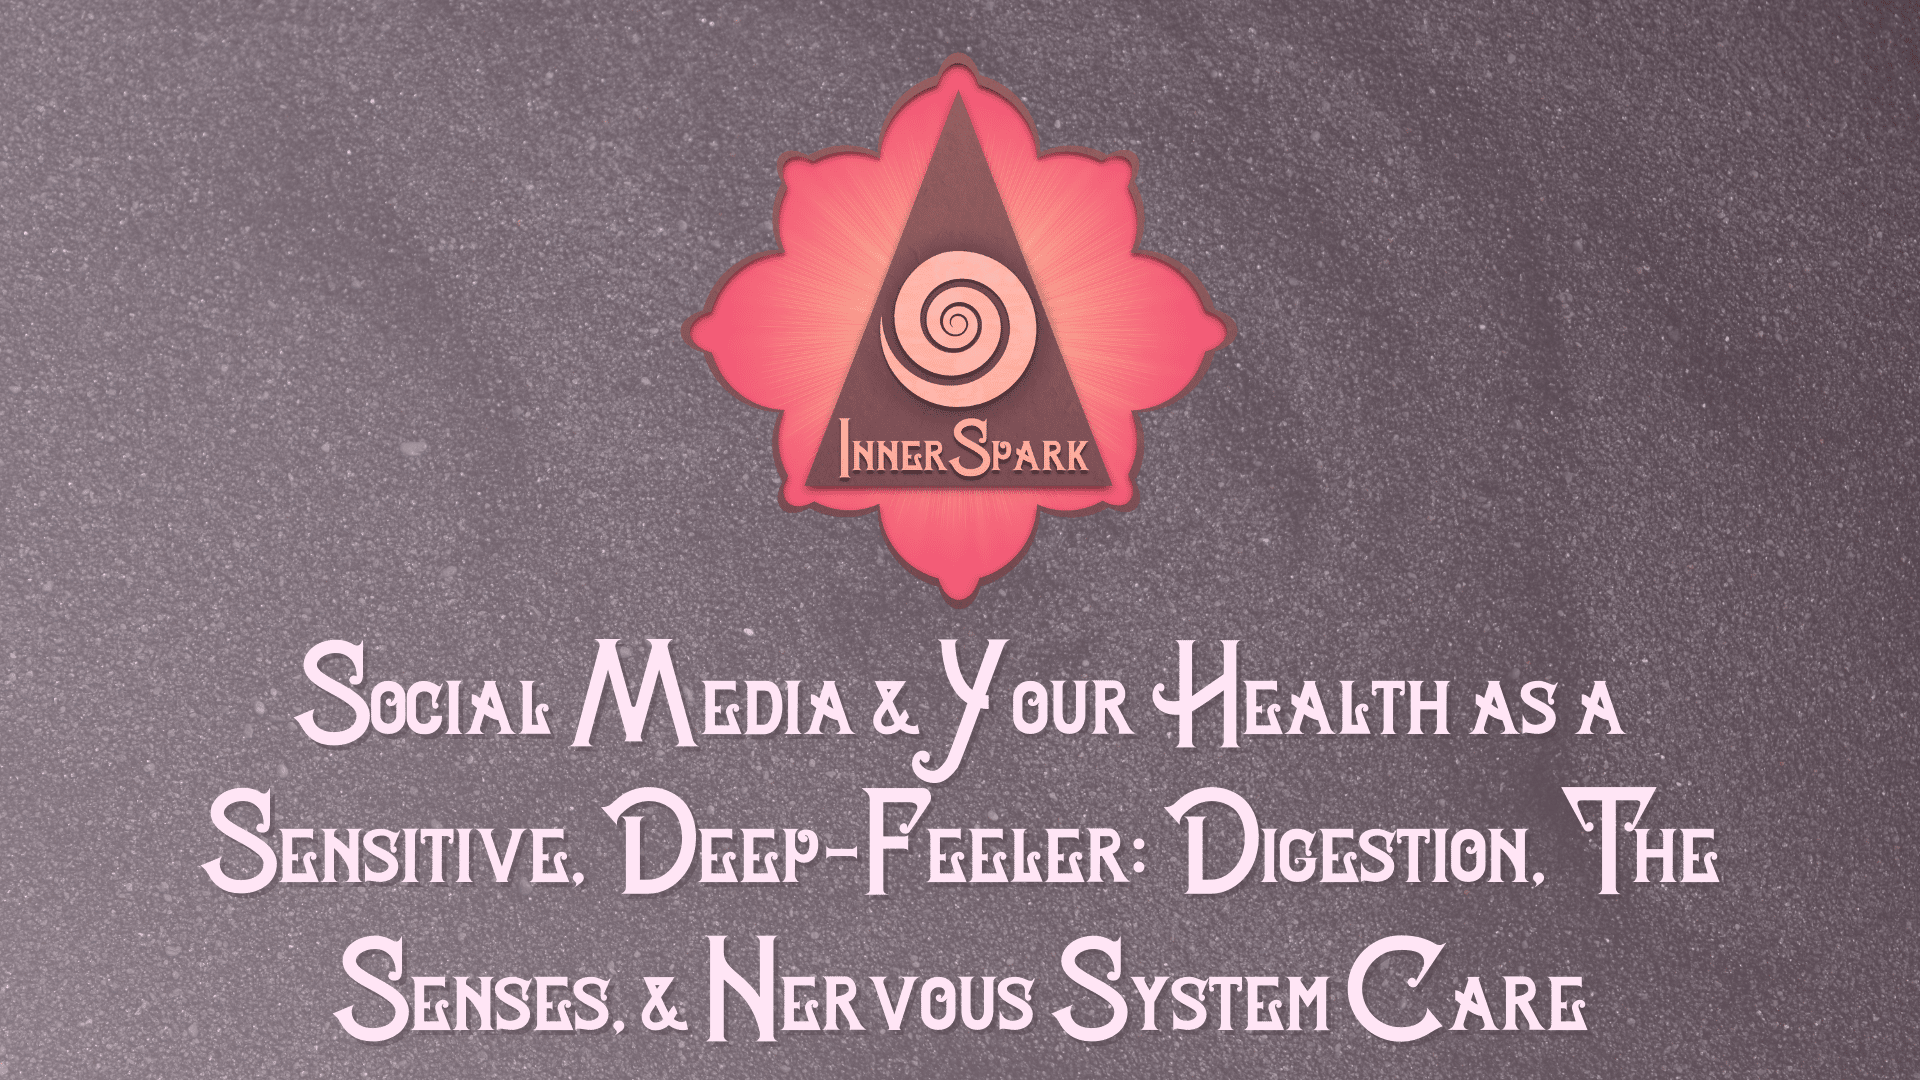 Social Media & Your Health as a Sensitive, Deep-Feeler: Digestion, The Senses, & Nervous System Care